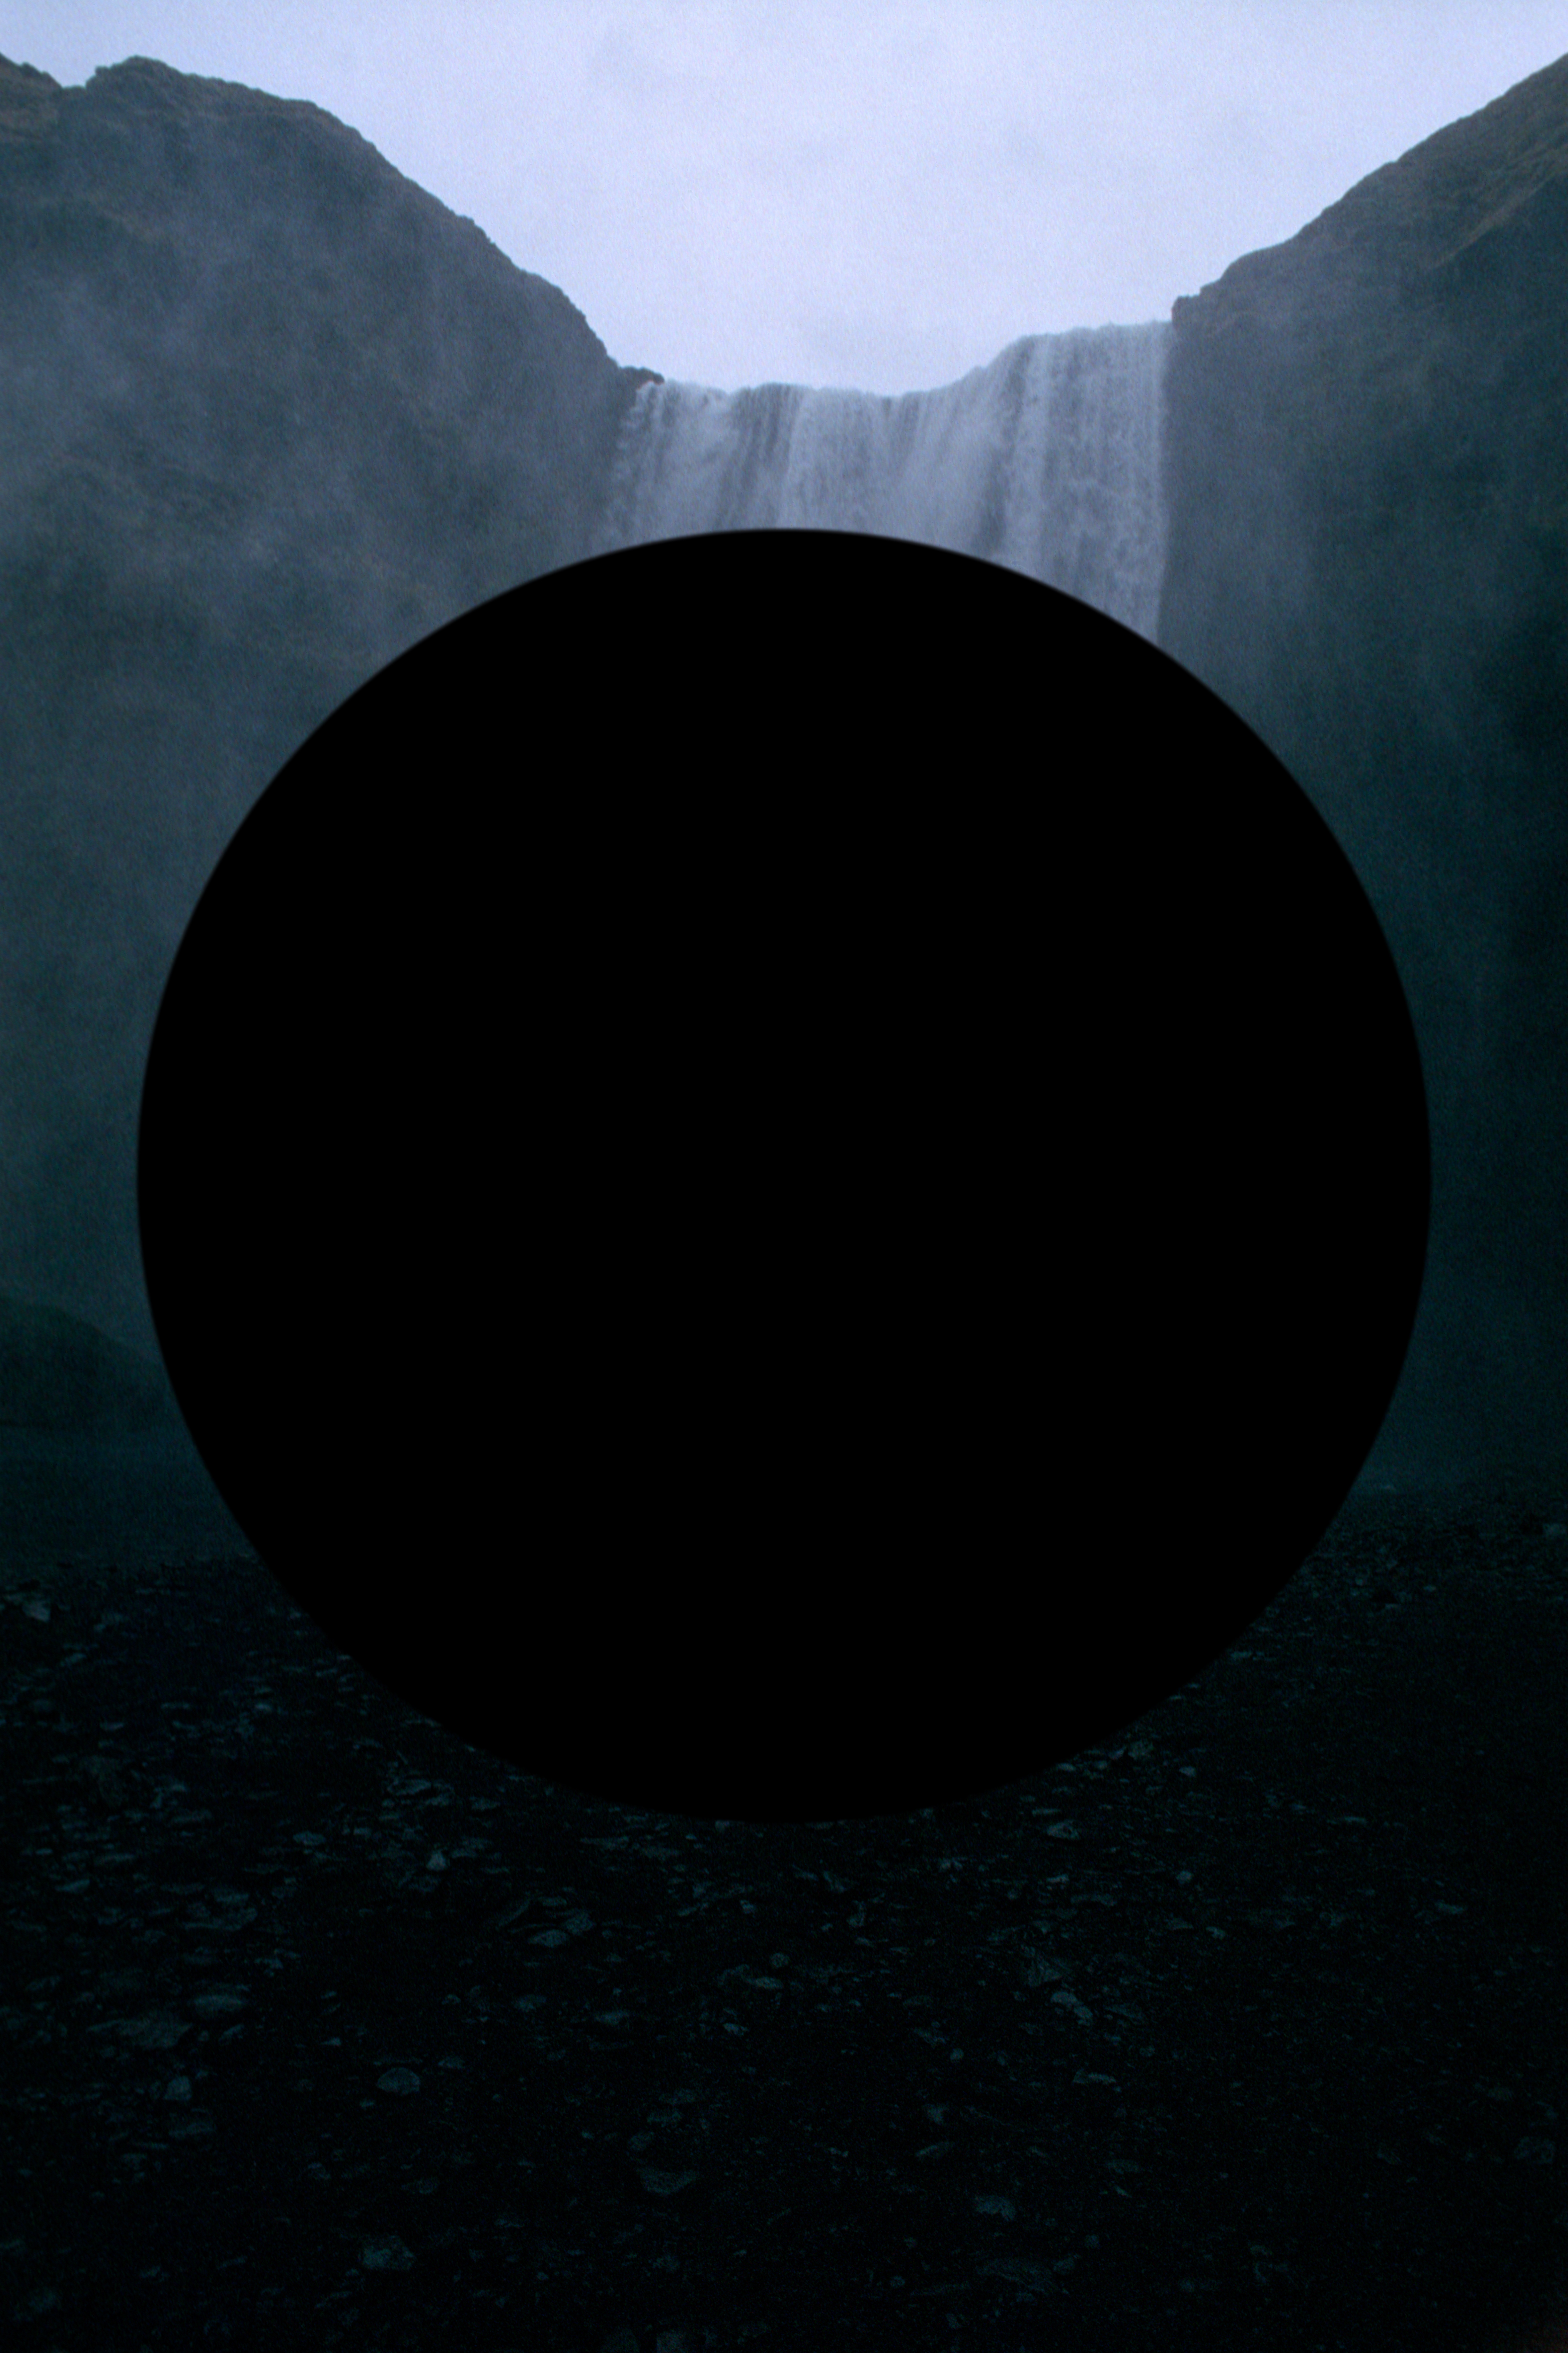 Stephan Machac CUE MARK 2021 »НАШ ВЕК« - Set 2 / Bild 9 - 2020 - Inkjet Print - 160 x 240 cm